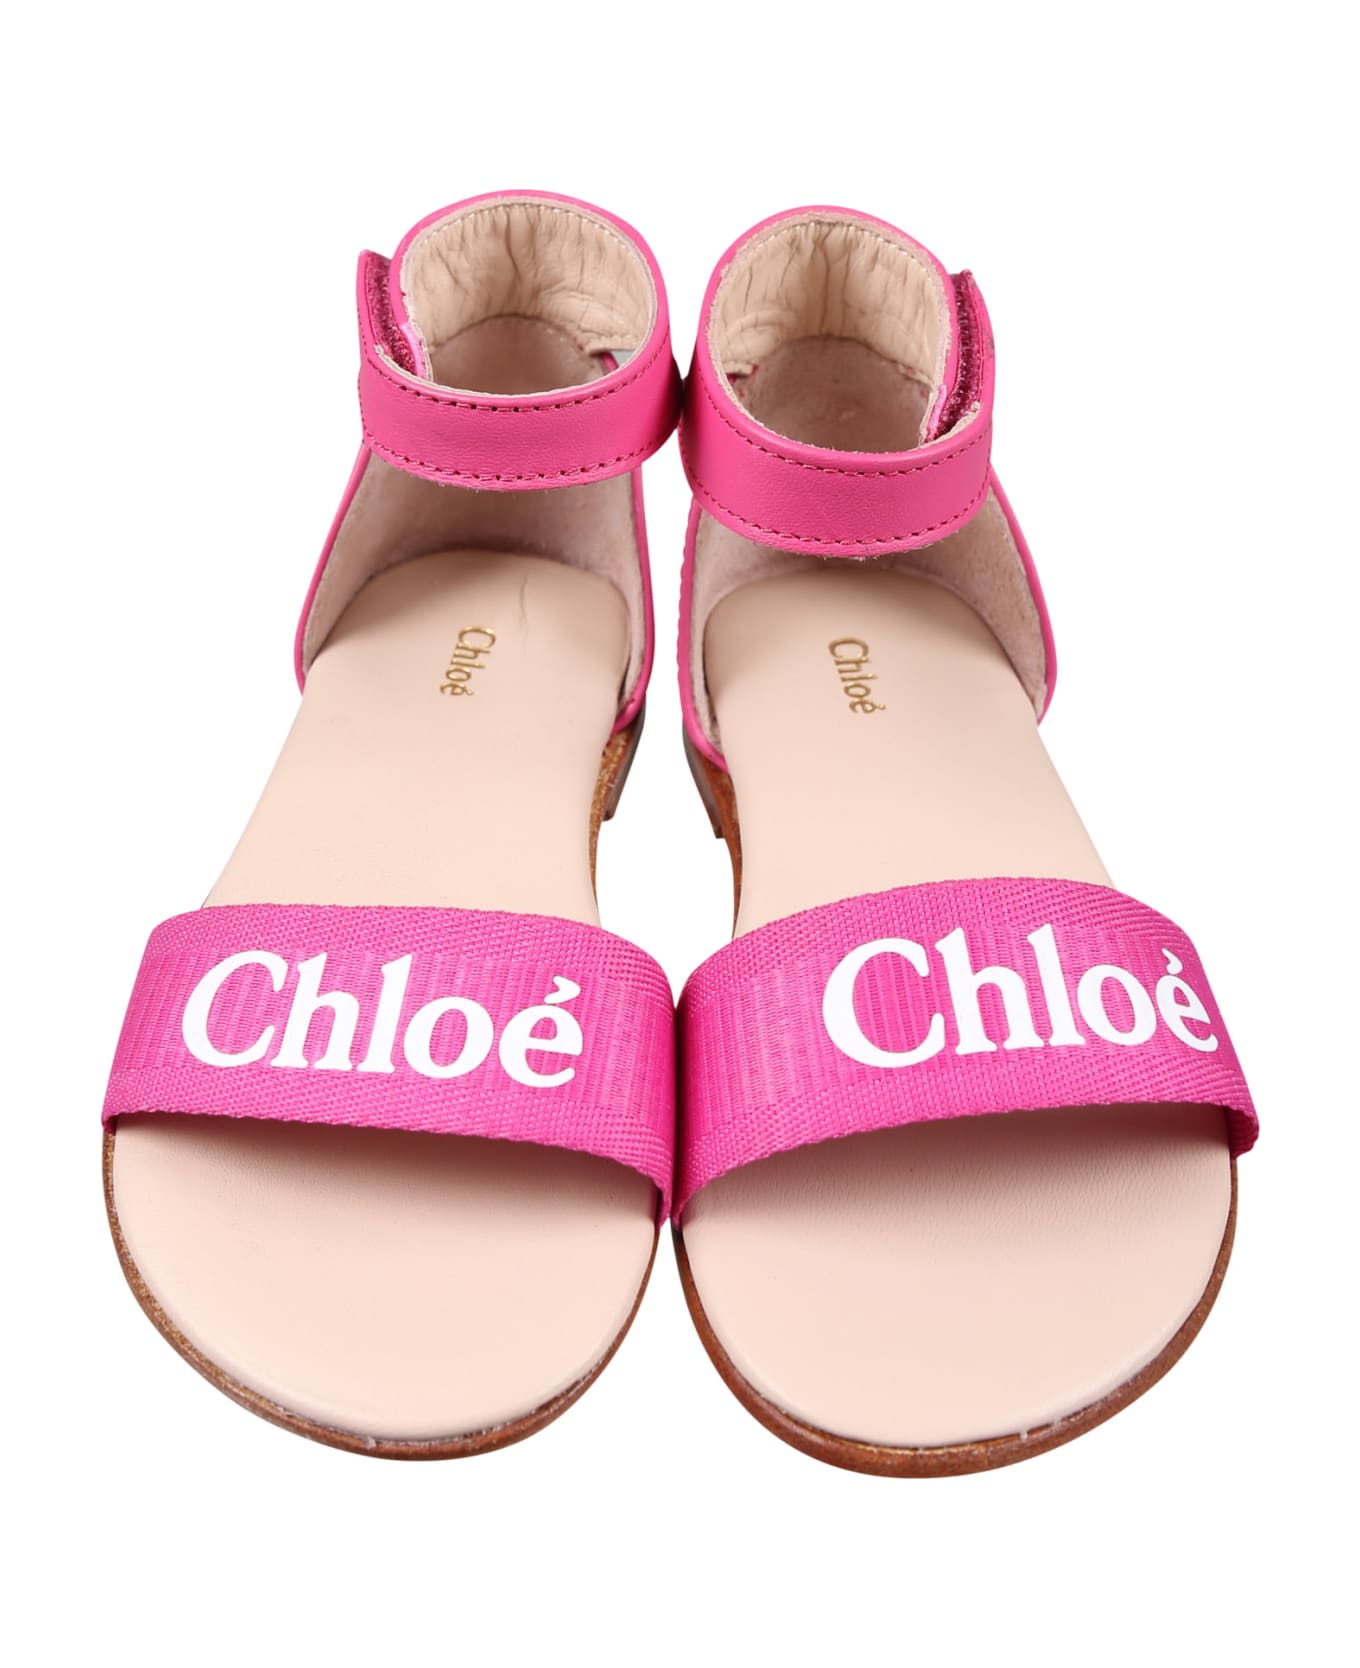 Chloé Fuchsia Sandals For Girl With Logo - Fuchsia